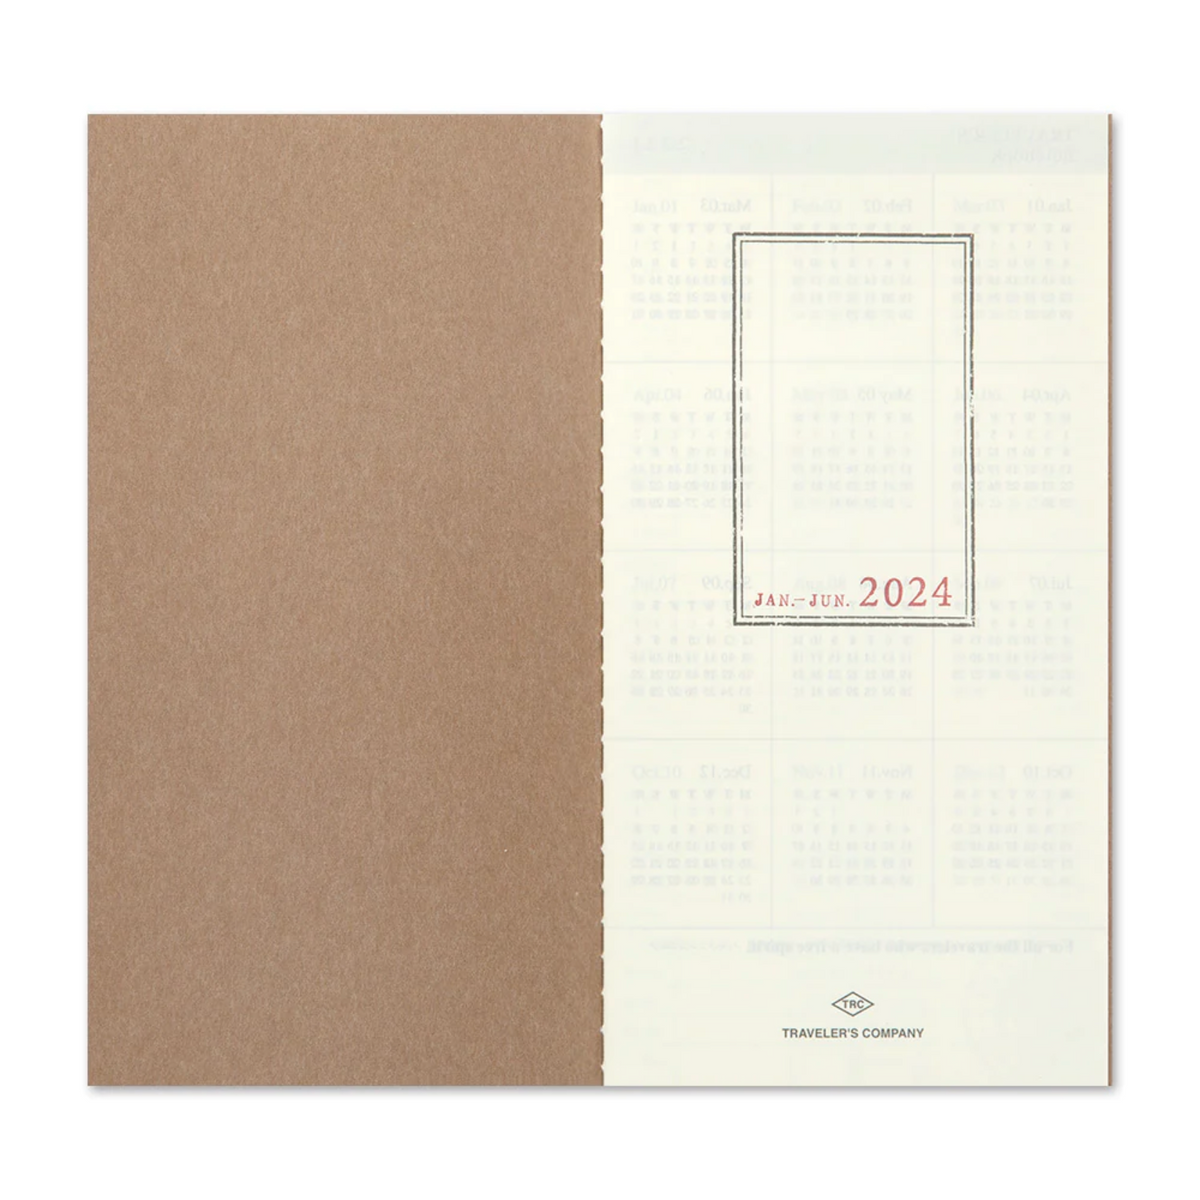 TRAVELER'S NOTEBOOK - 2024 Weekly Vertical (Regular Size)